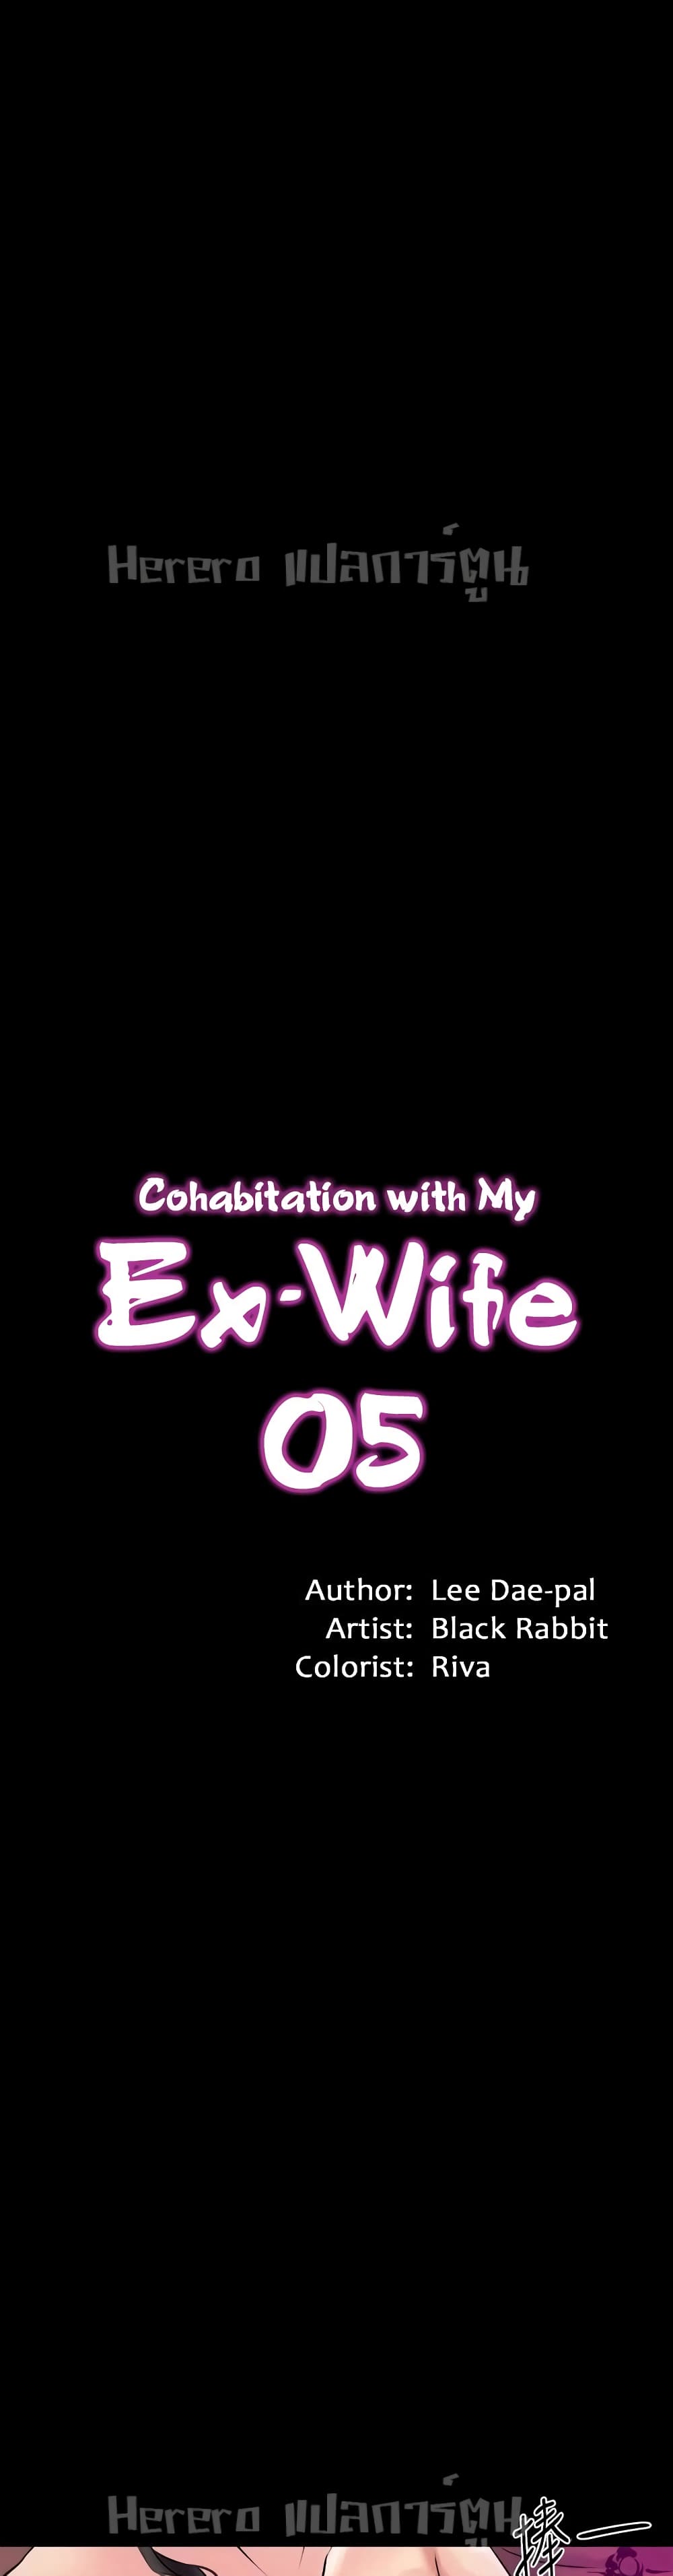 Cohabitation with My Ex Wife 5 (2)